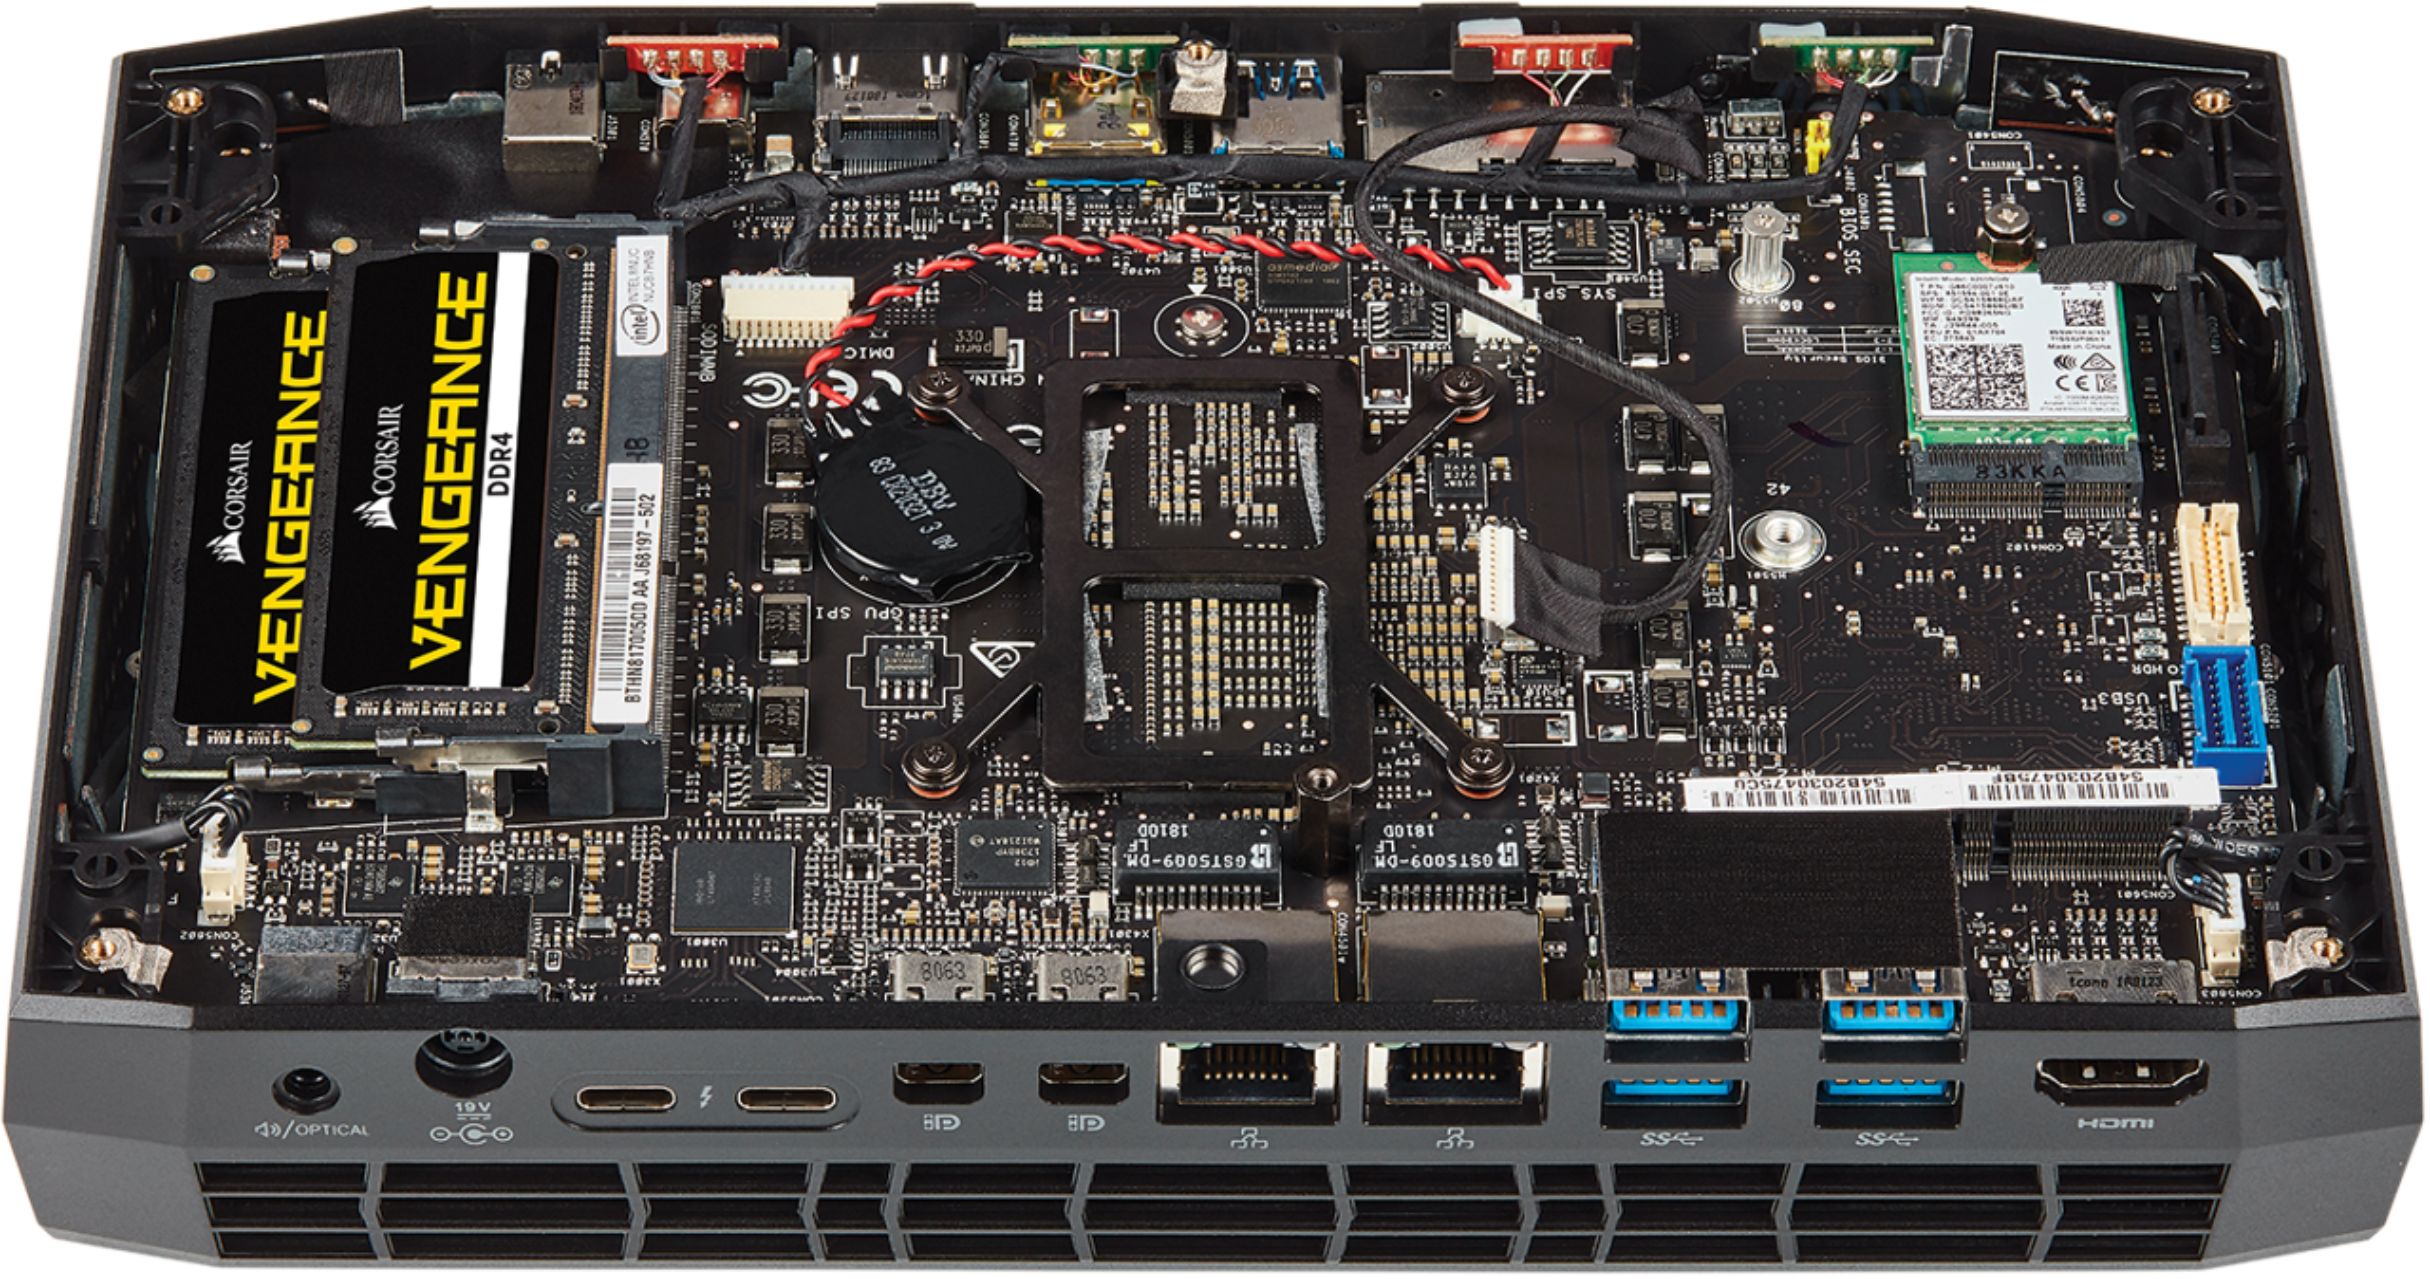 CORSAIR - Vengeance Series 32GB (2x16GB)  2666MHz DDR4 C18 SODIMM Laptop Memory - Black